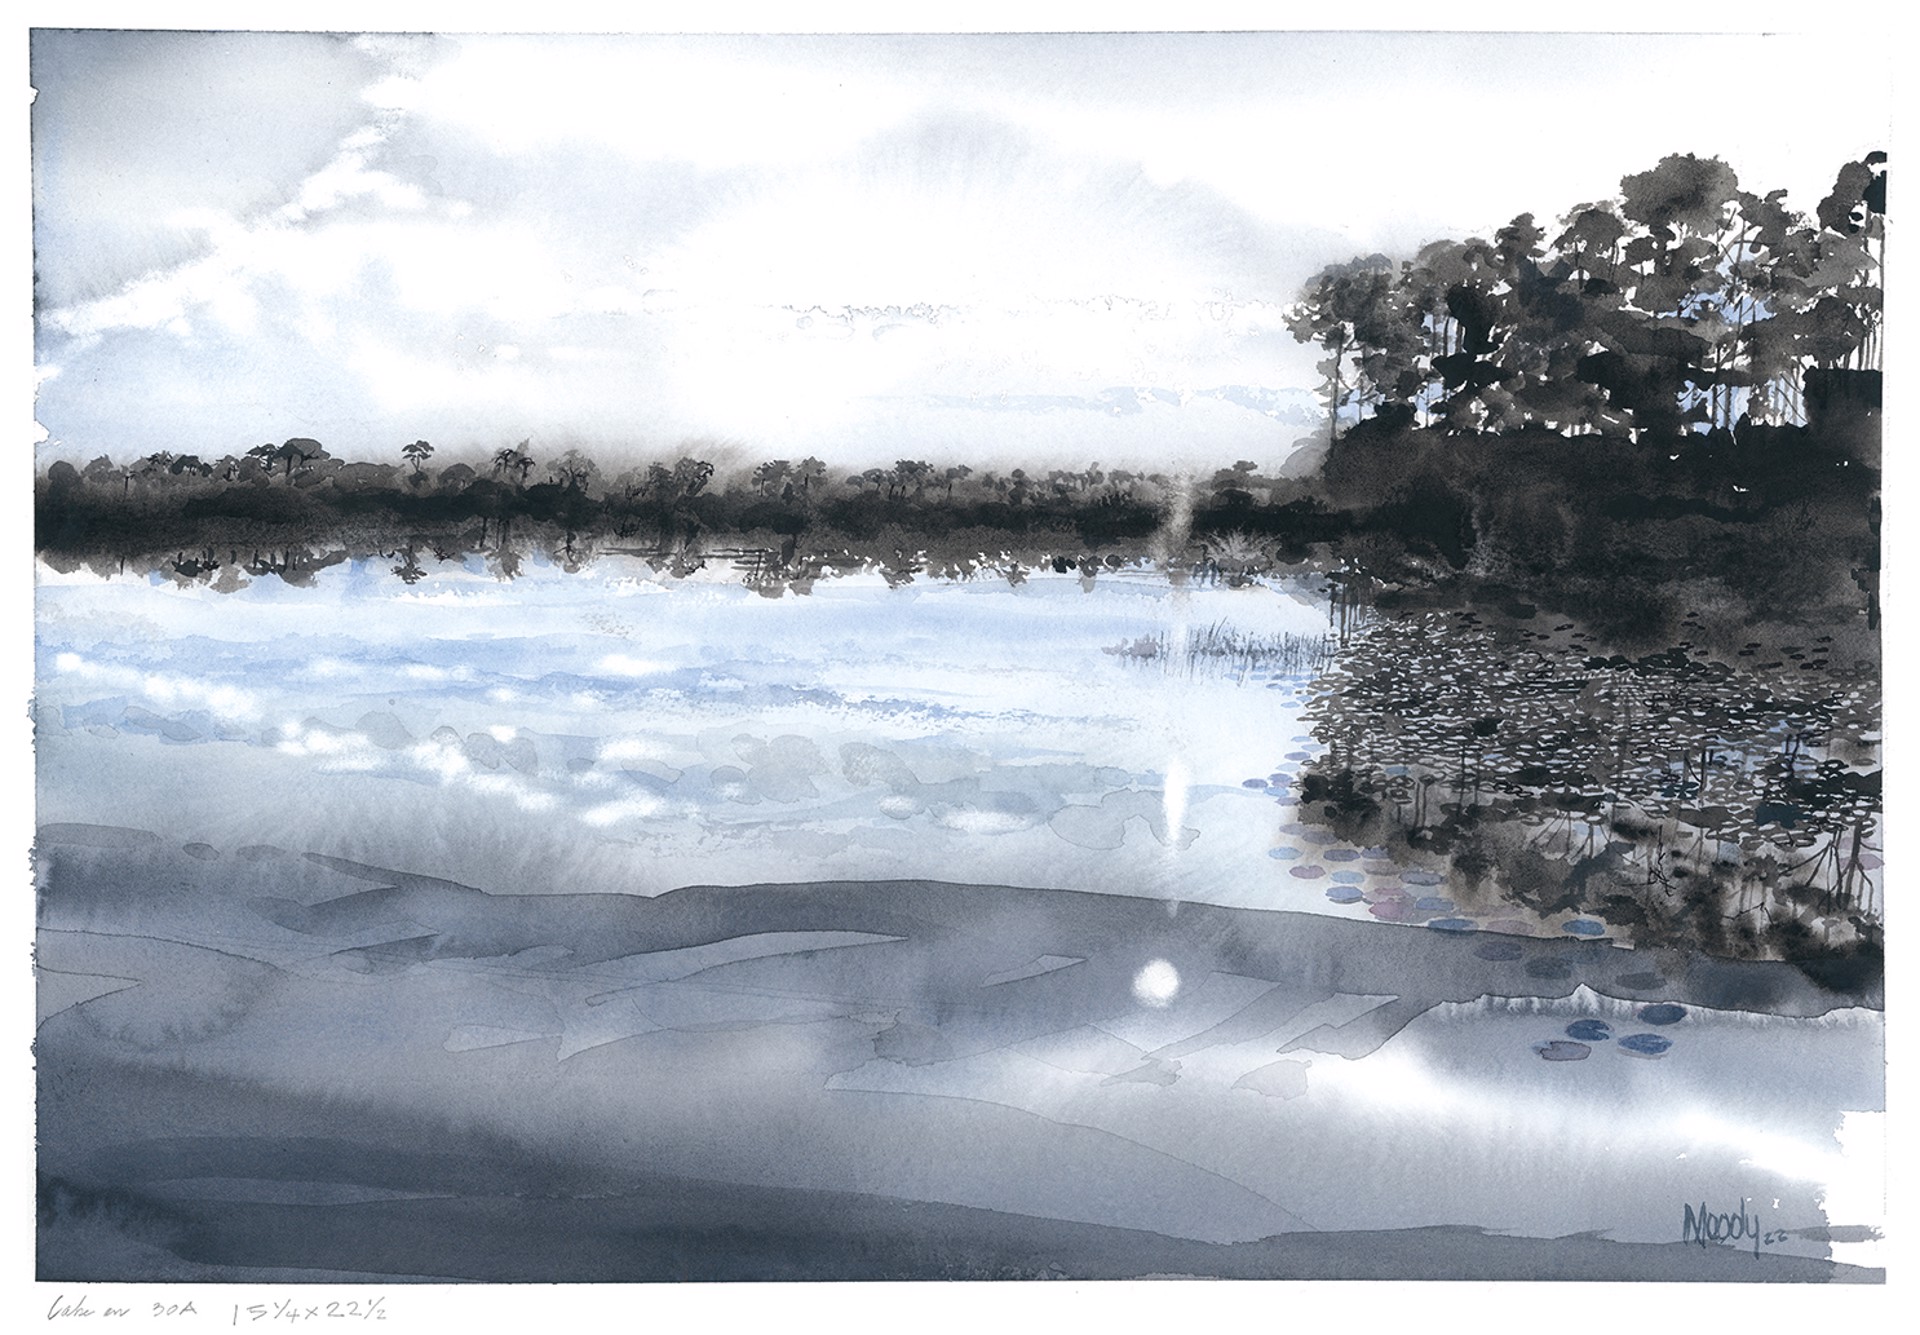 Lake on 30A by Bob Moody